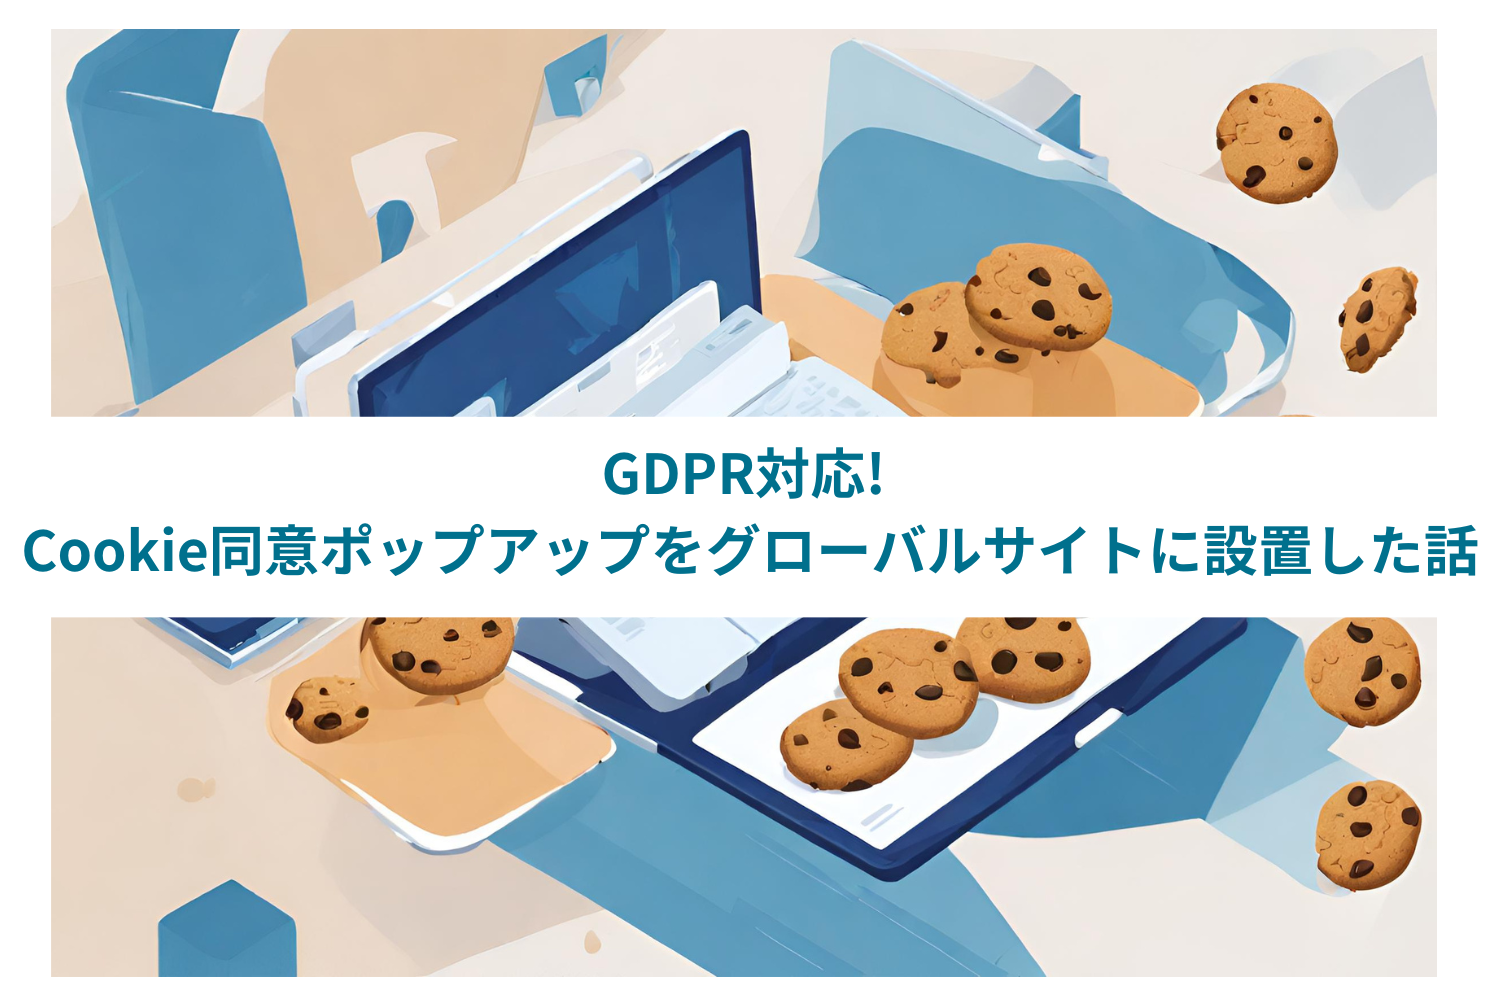 Cover Image for GDPR対応! Cookie同意ポップアップをグローバルサイトに設置した話